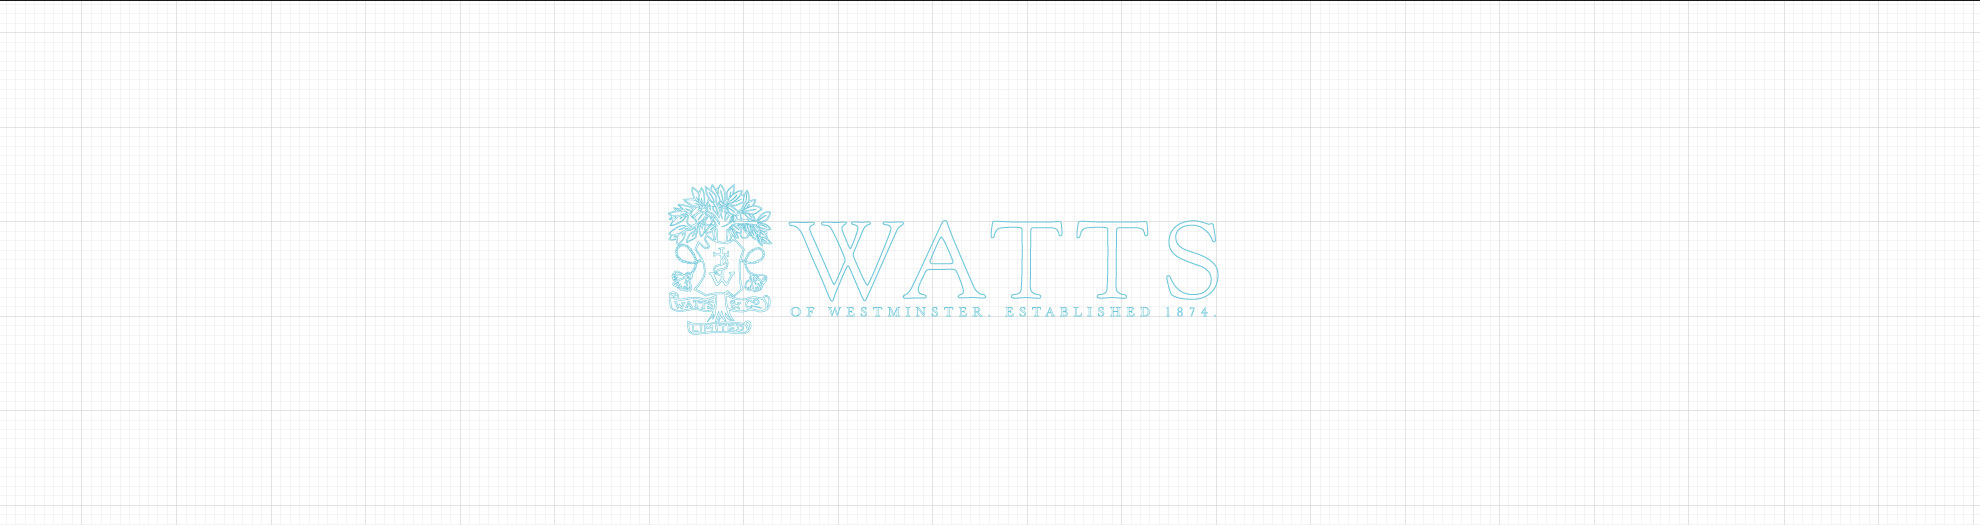 Watts 1874 Logo 3